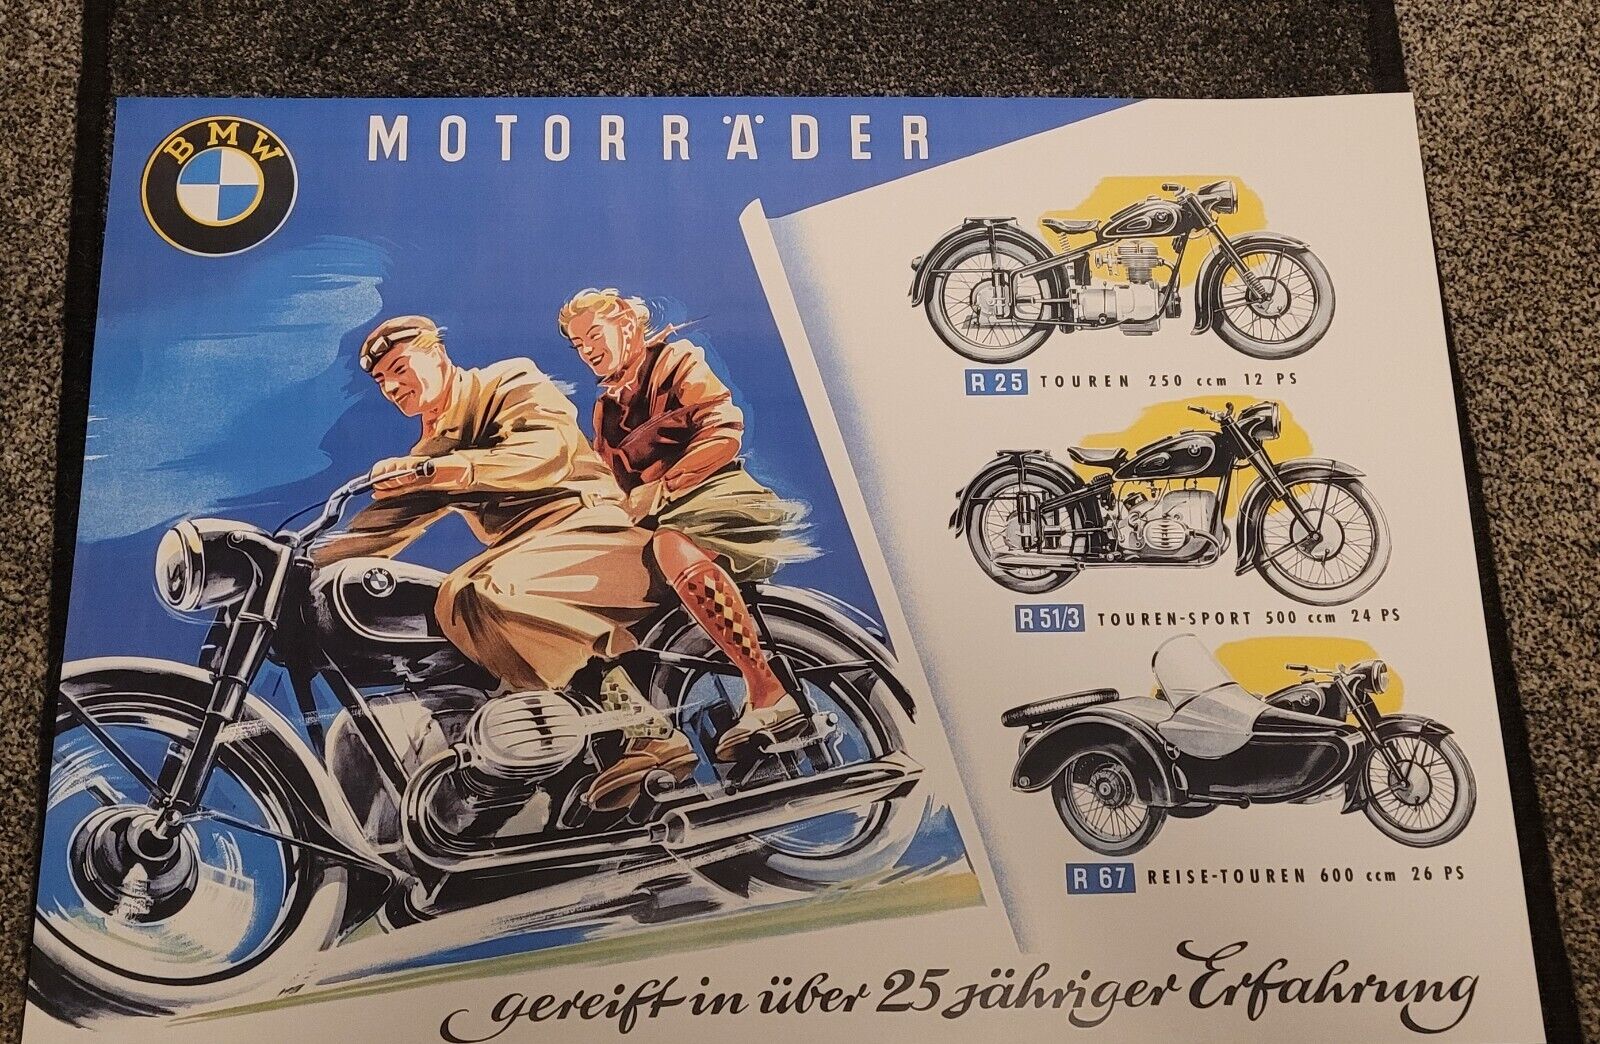 BMW Motorrad Motorrader Vintage Poster Rare R25 R51/3 R67 A2 size quality repro